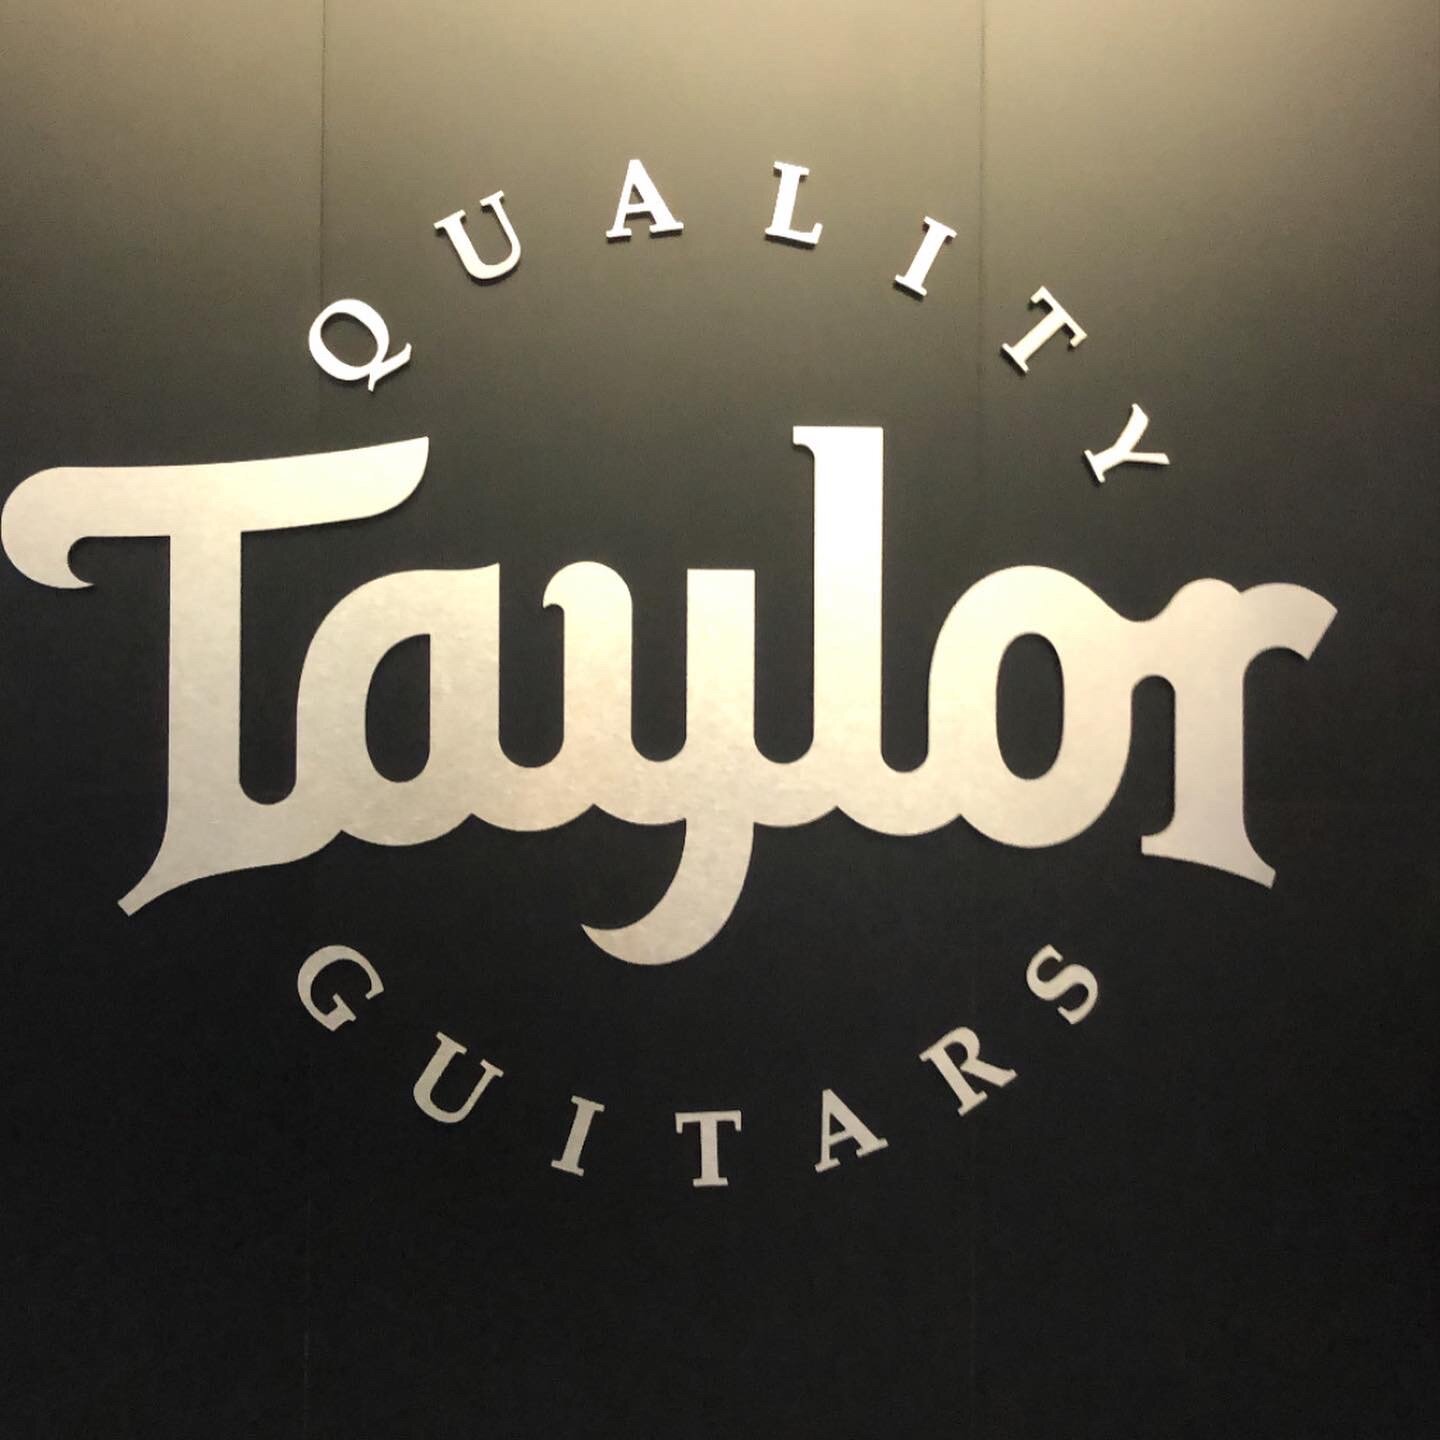 Taylor Guitars